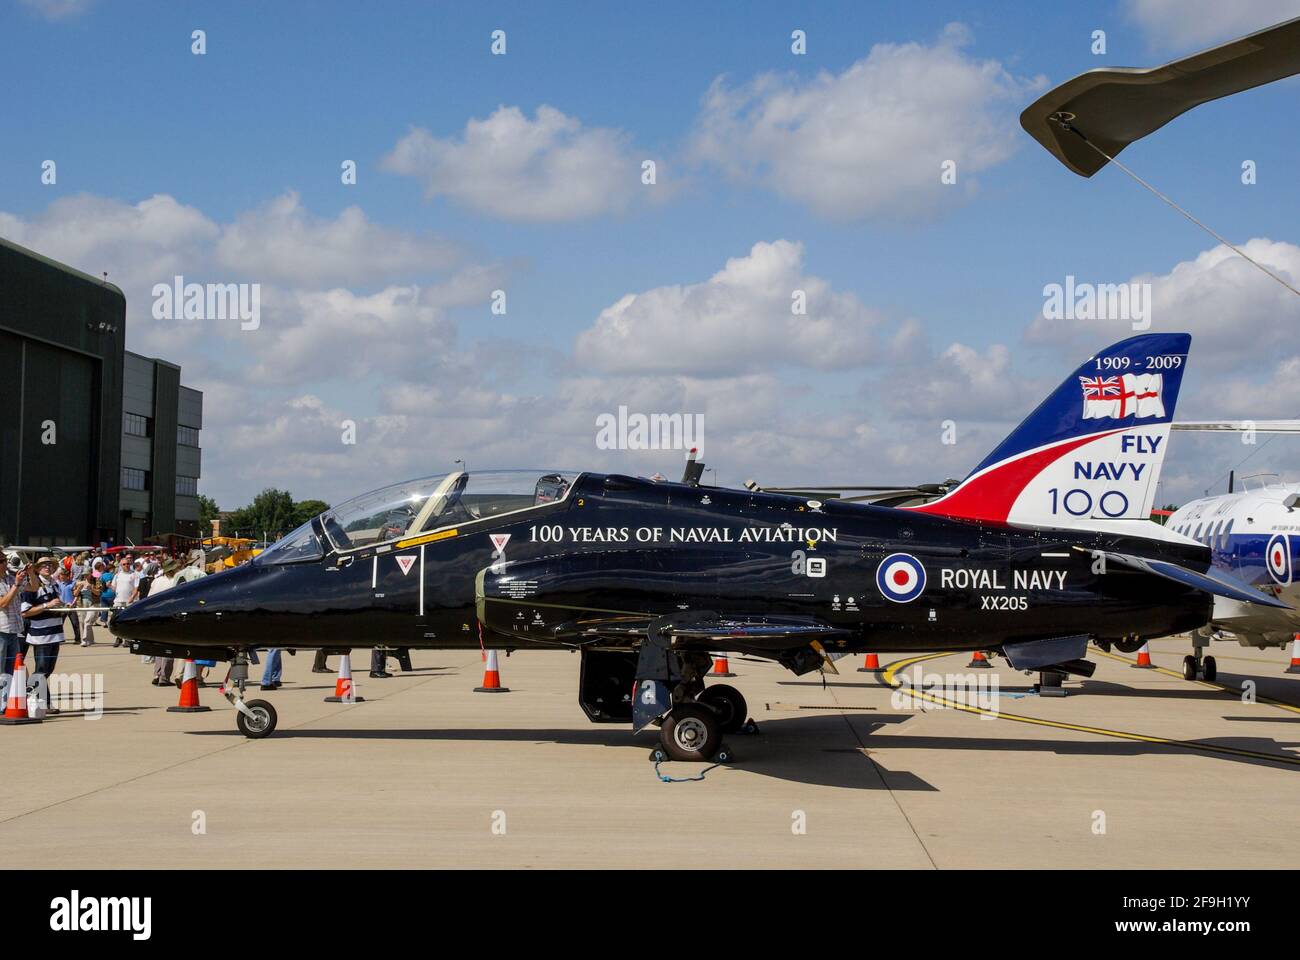 British Aerospace BAe Hawk T1 jet trainer aereo con Fleet Air Arm speciale, Royal Navy centenario, 100 anni di aviazione navale, Fly Navy 100 schema Foto Stock